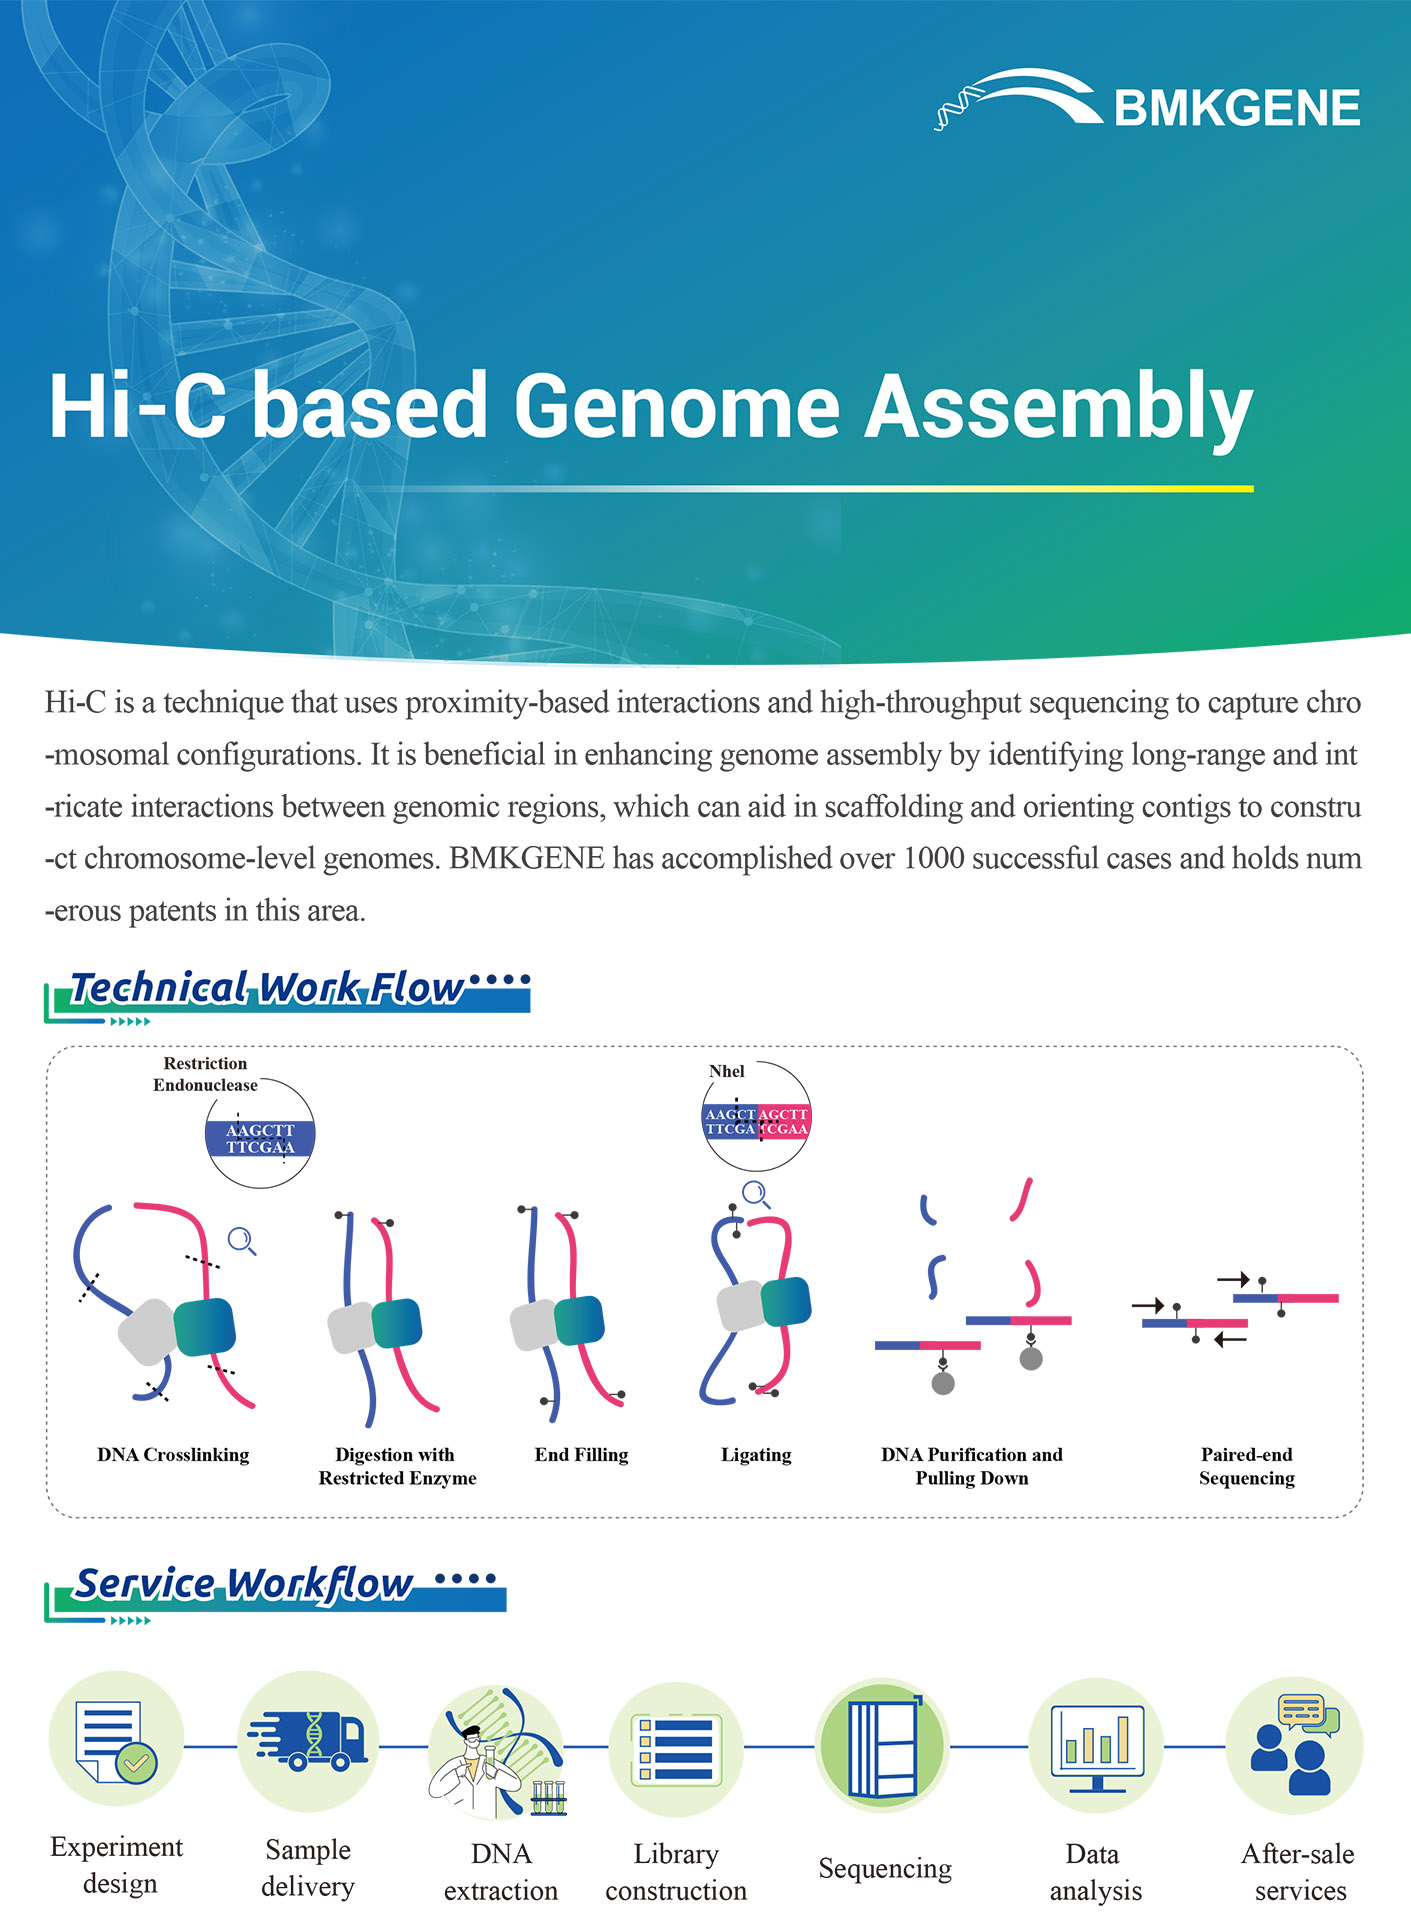 https://www.bmkgene.com/uploads/Hi-C-आधारित-Genome-Assembly-BMKGENE-2310.pdf